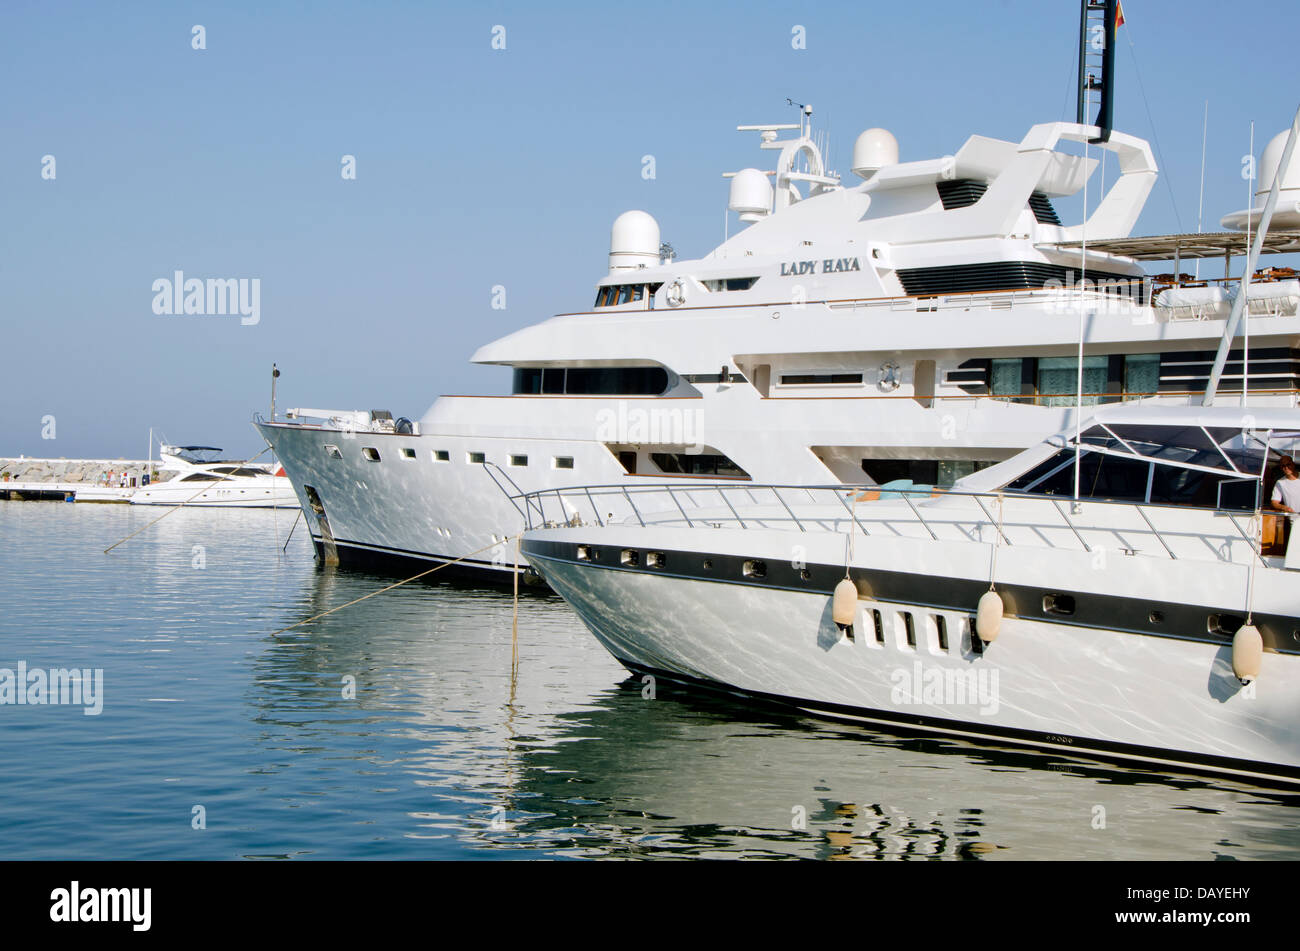 Saudi Royal super yacht Lady Haya moored in luxury marina Puerto banus in Marbella. Costa del Sol, Spain. Stock Photo